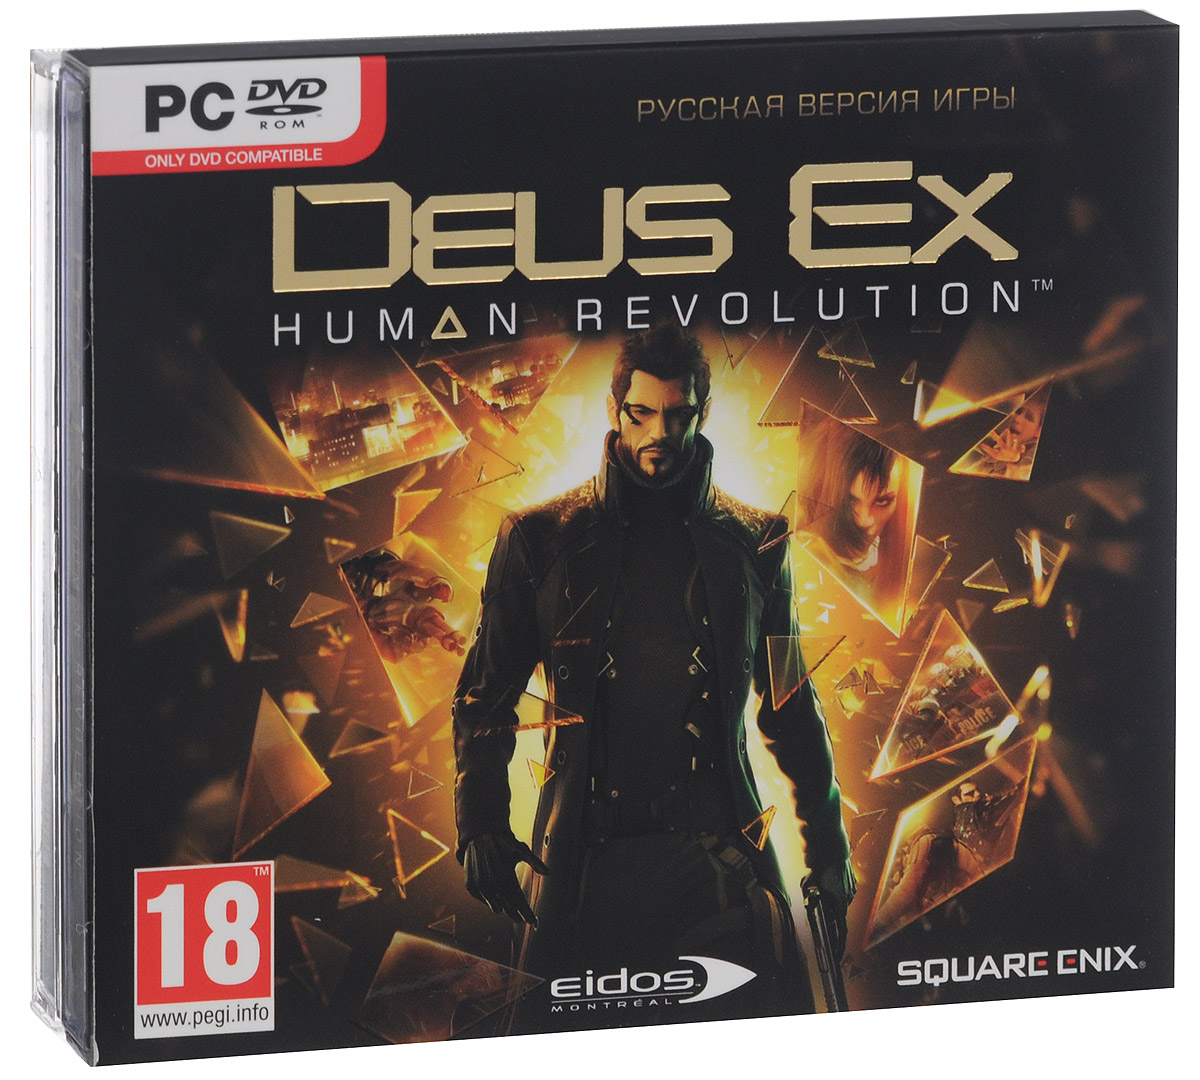 Deus Ex: Human Revolution.   - Square Enix / Eidos Montreal - Square Enix / Eidos Montreal  Deus Ex !     ,     .                .  ,         :     .    ,    ,         .      ,   ,     - -,   ,    .    .    .        -   ?   .        -    Deus Ex: Human Revolution.     ...